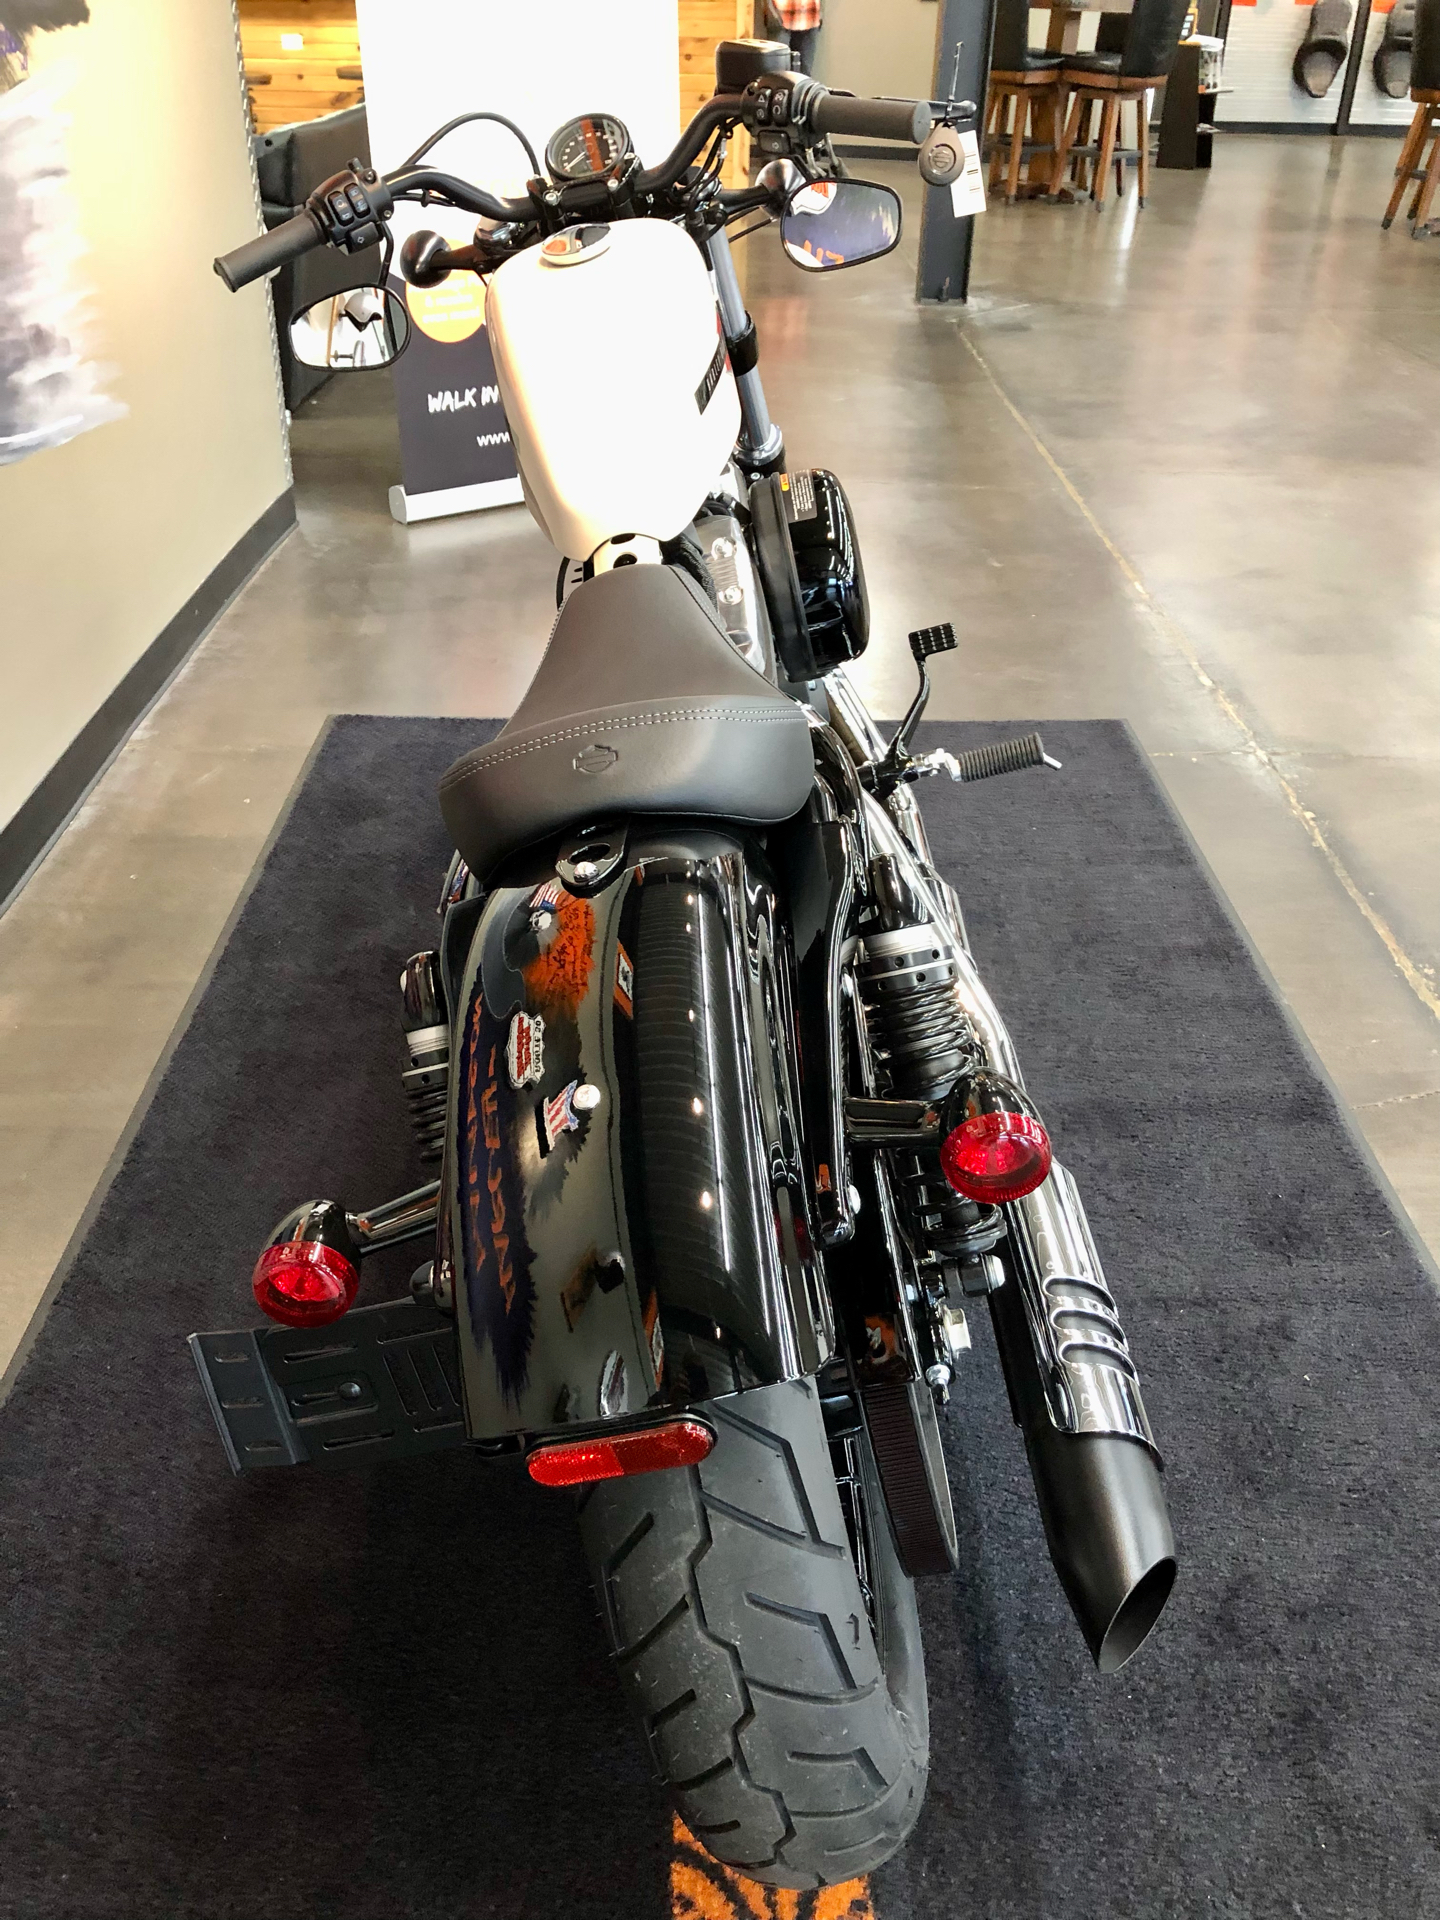 2022 Harley-Davidson Forty-Eight® in Upper Sandusky, Ohio - Photo 3